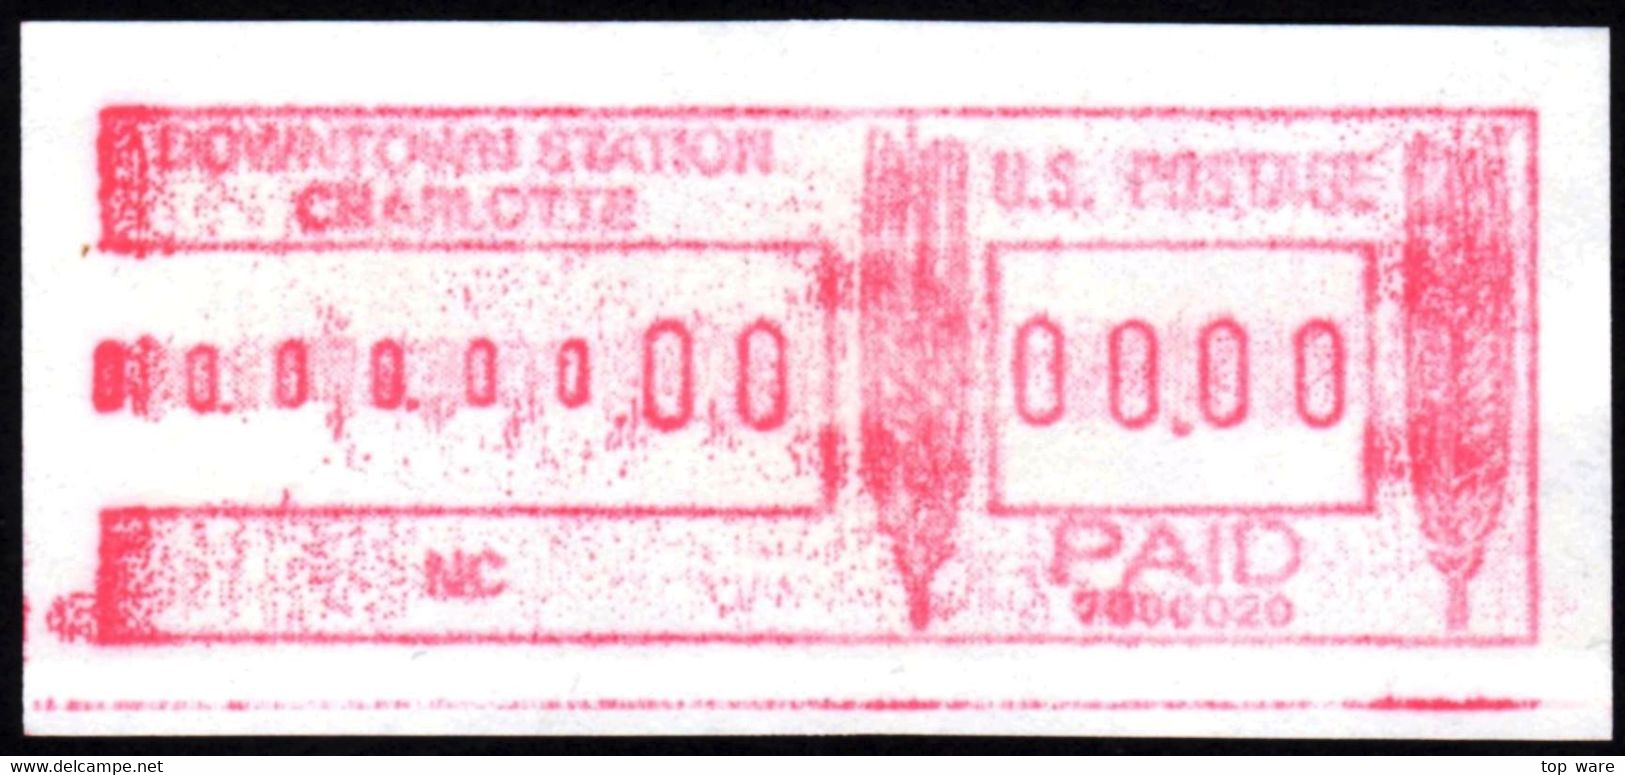 USA 1984 ATM Meter STAMPS FRIDEN (FRAMA) Trial Issue CHARLOTTE # 7000020 / 00.00 MNH / Automatenmarken CVP / SCARCE - Machine Labels [ATM]